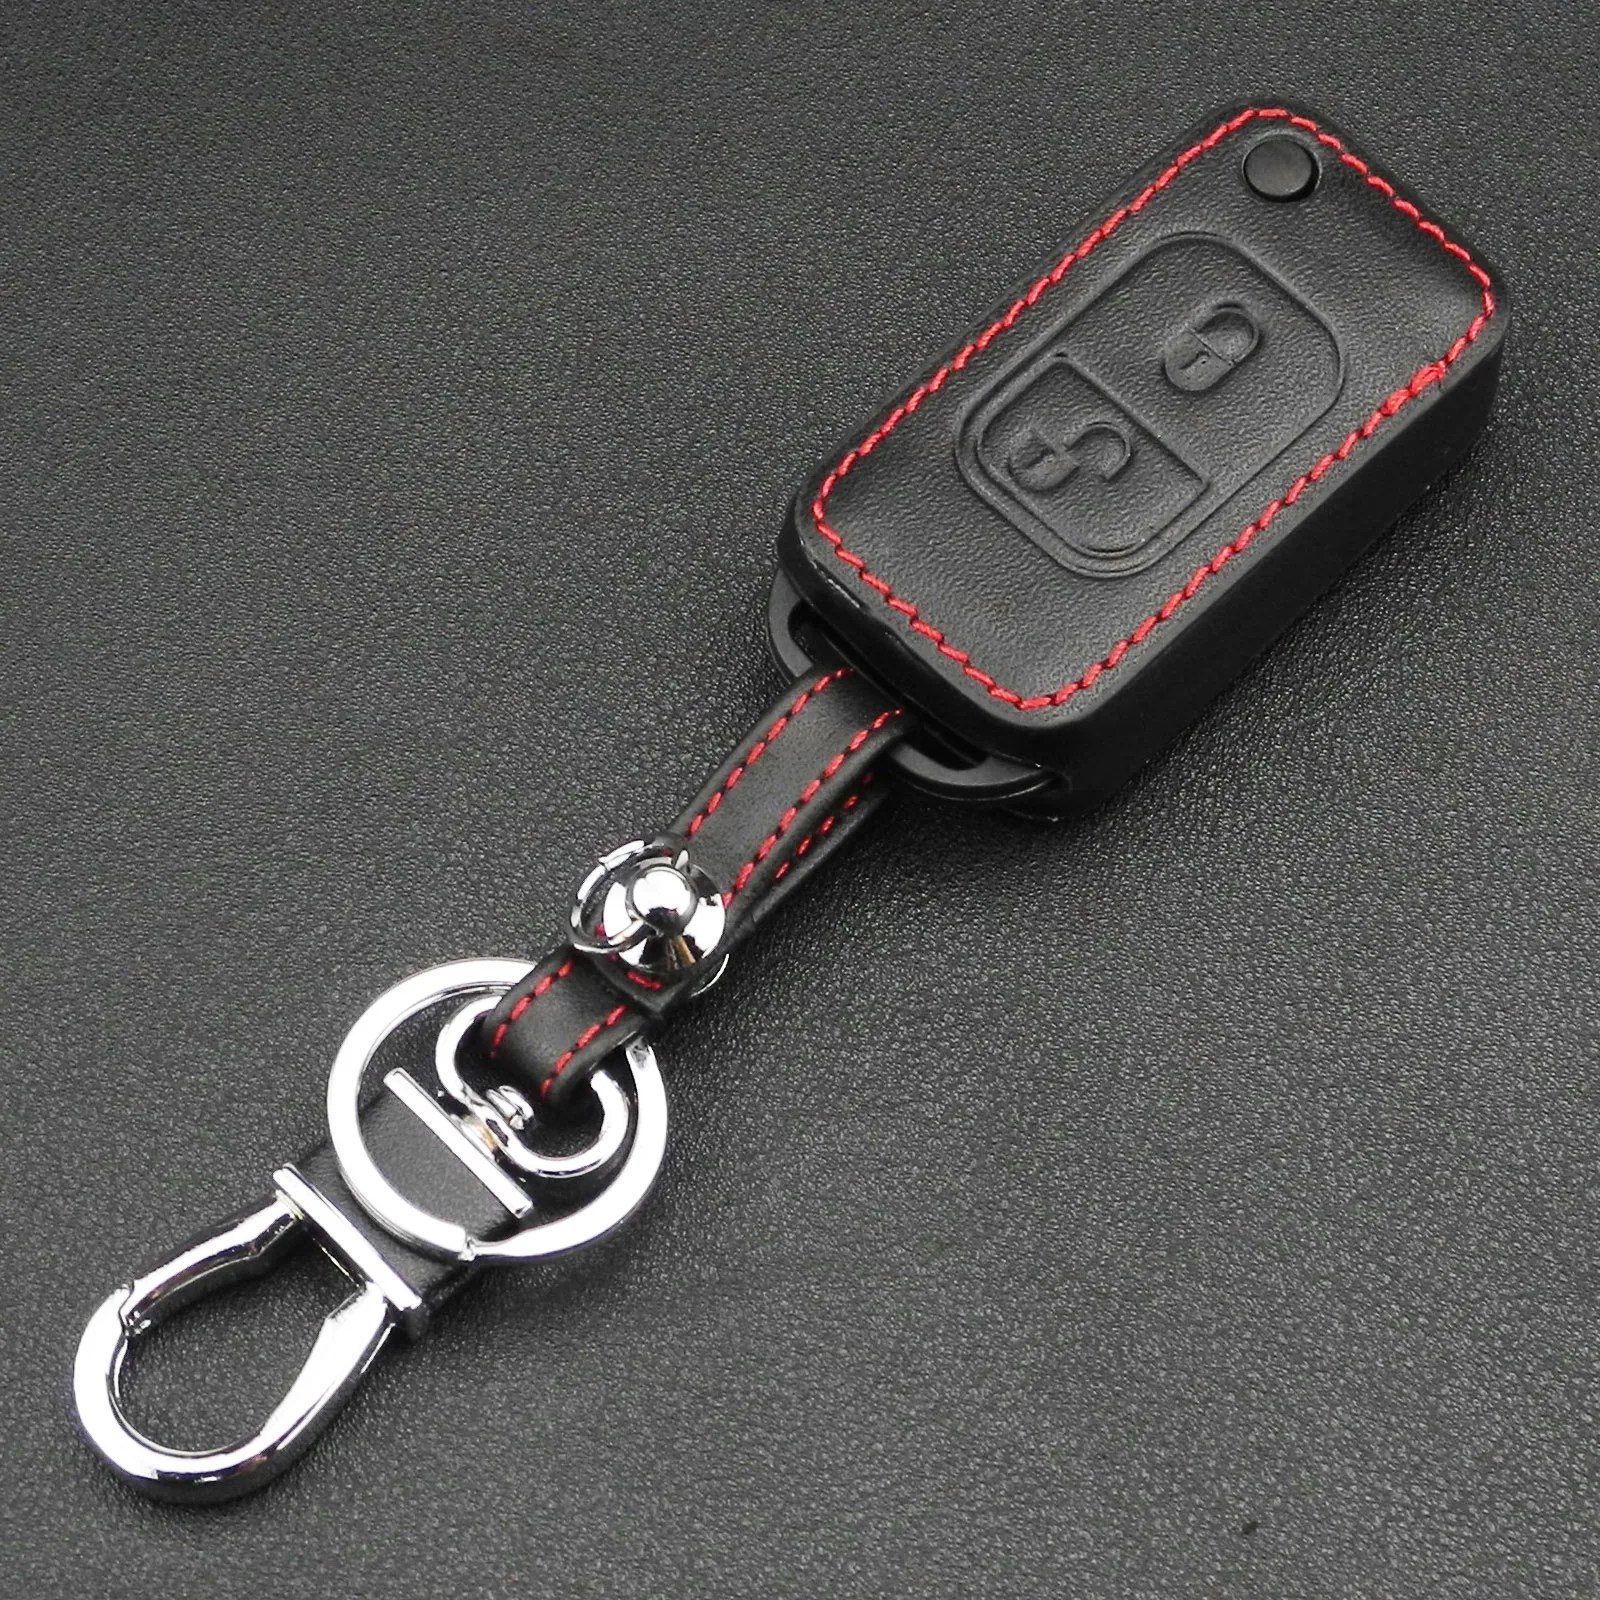 Jingyuqin кожаный чехол для дистанционного ключа для Mercedes Benz SLK E113 A C E S W168 W20 2 кнопки откидной складной чехол для ключа автомобиля